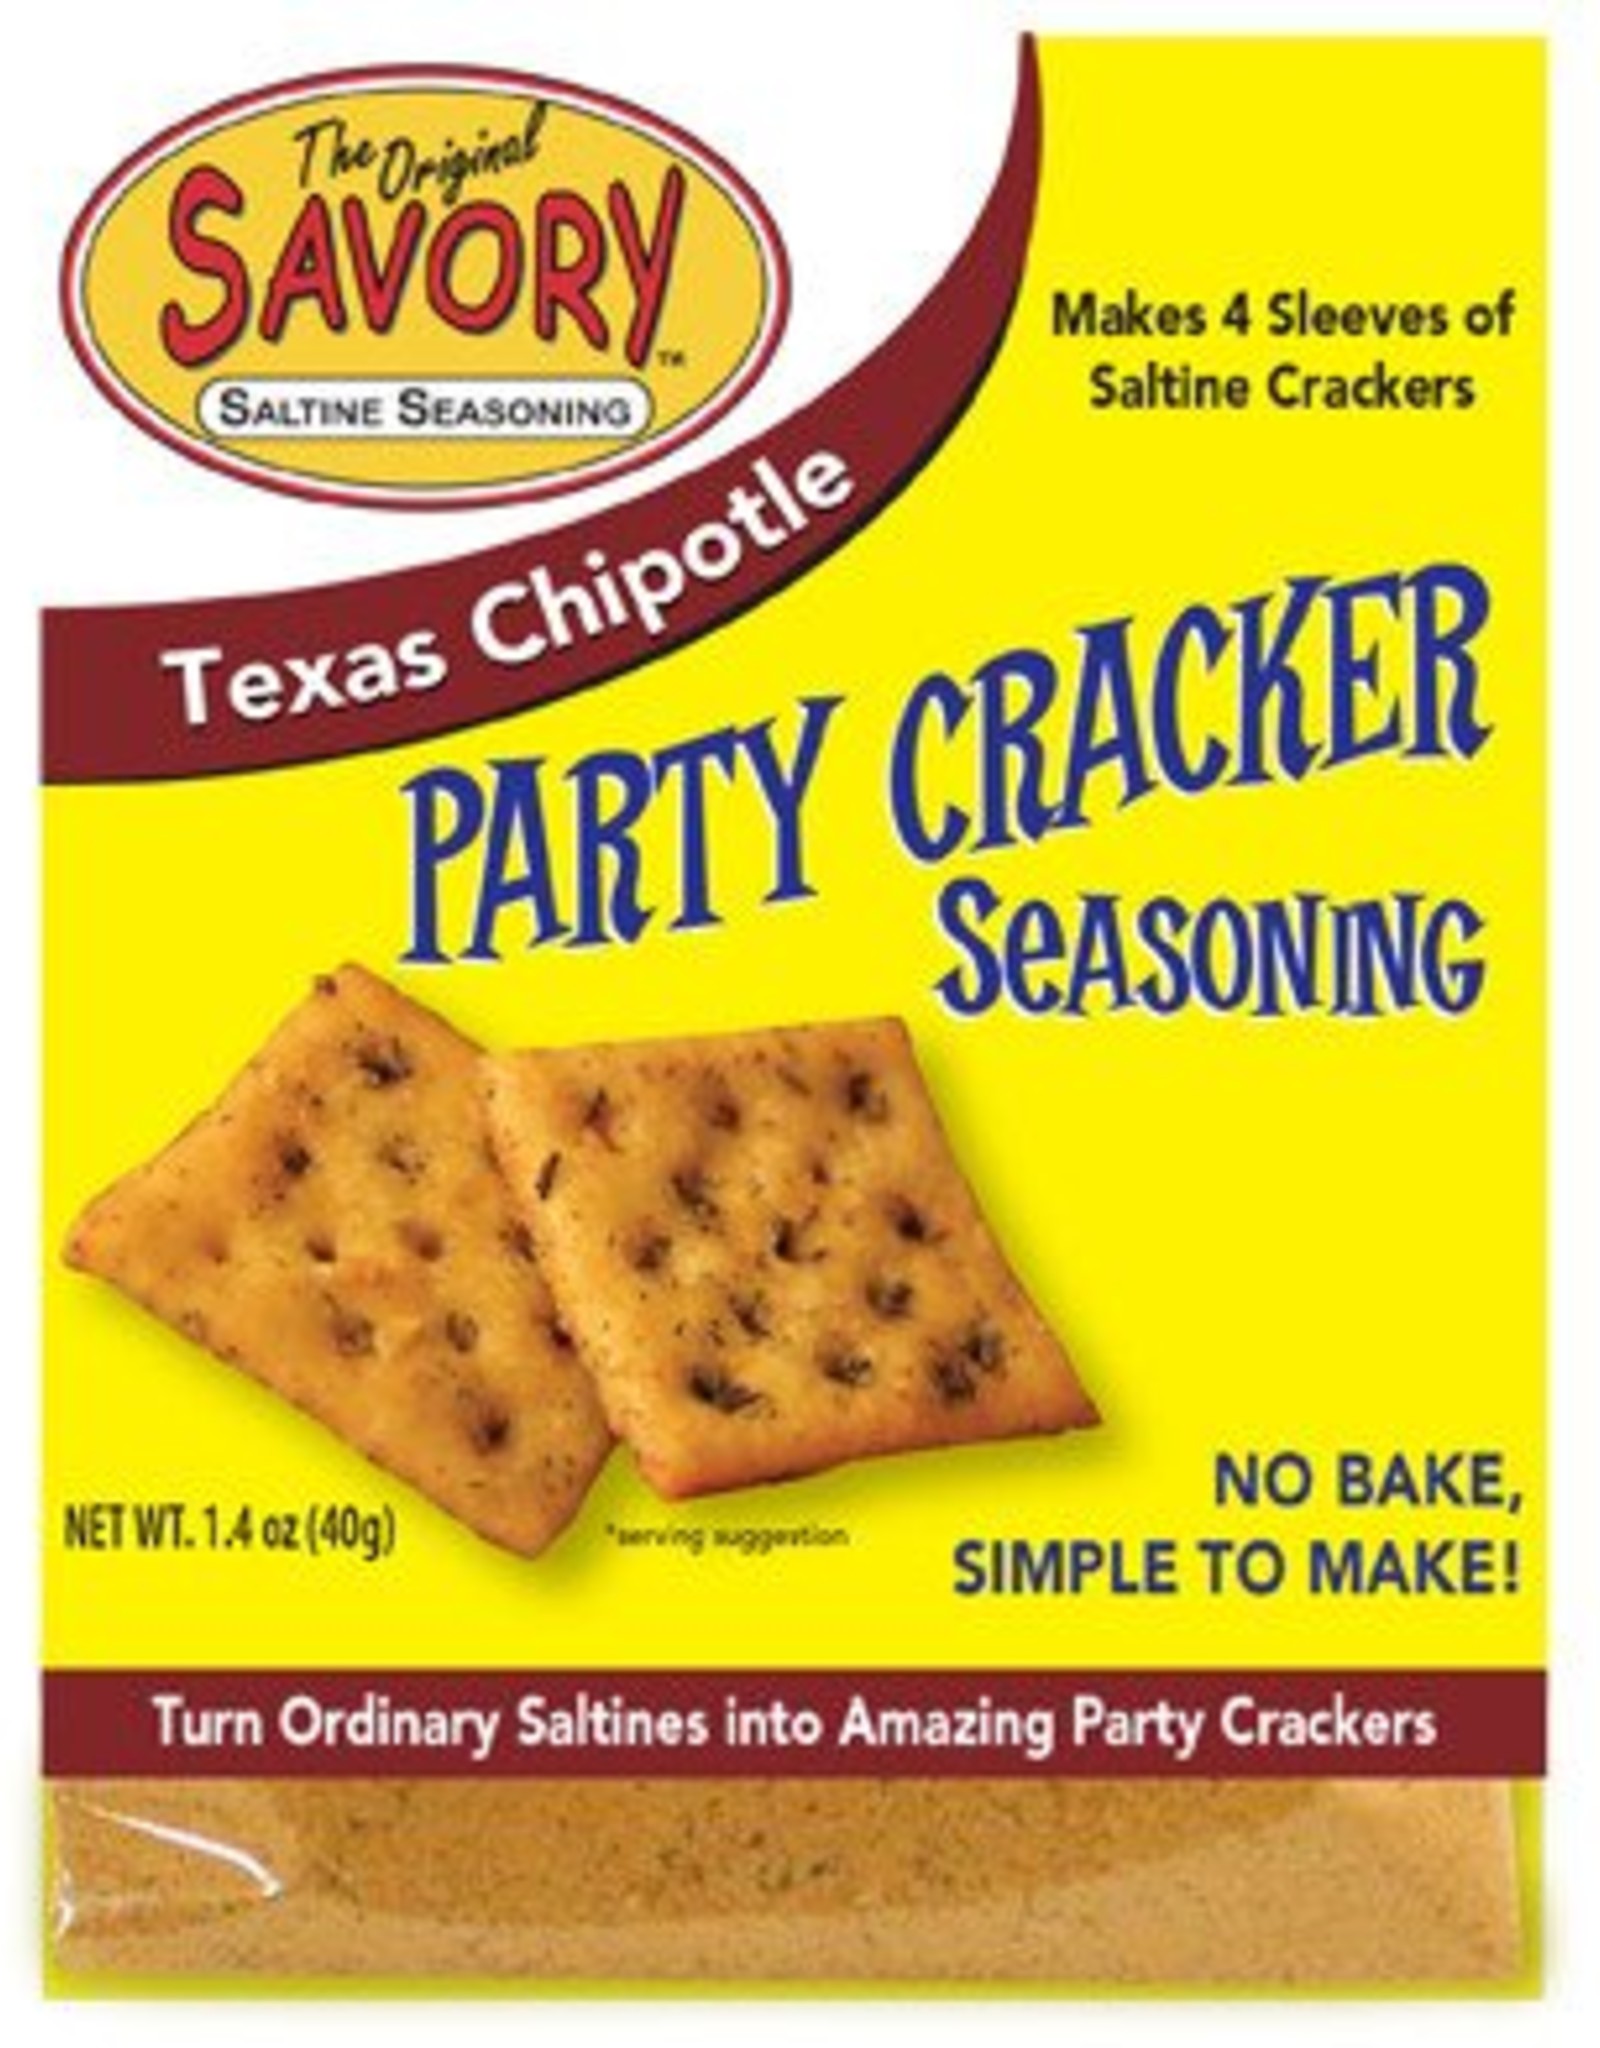 Savory Saltine Seasoning (Texas Chipotle)